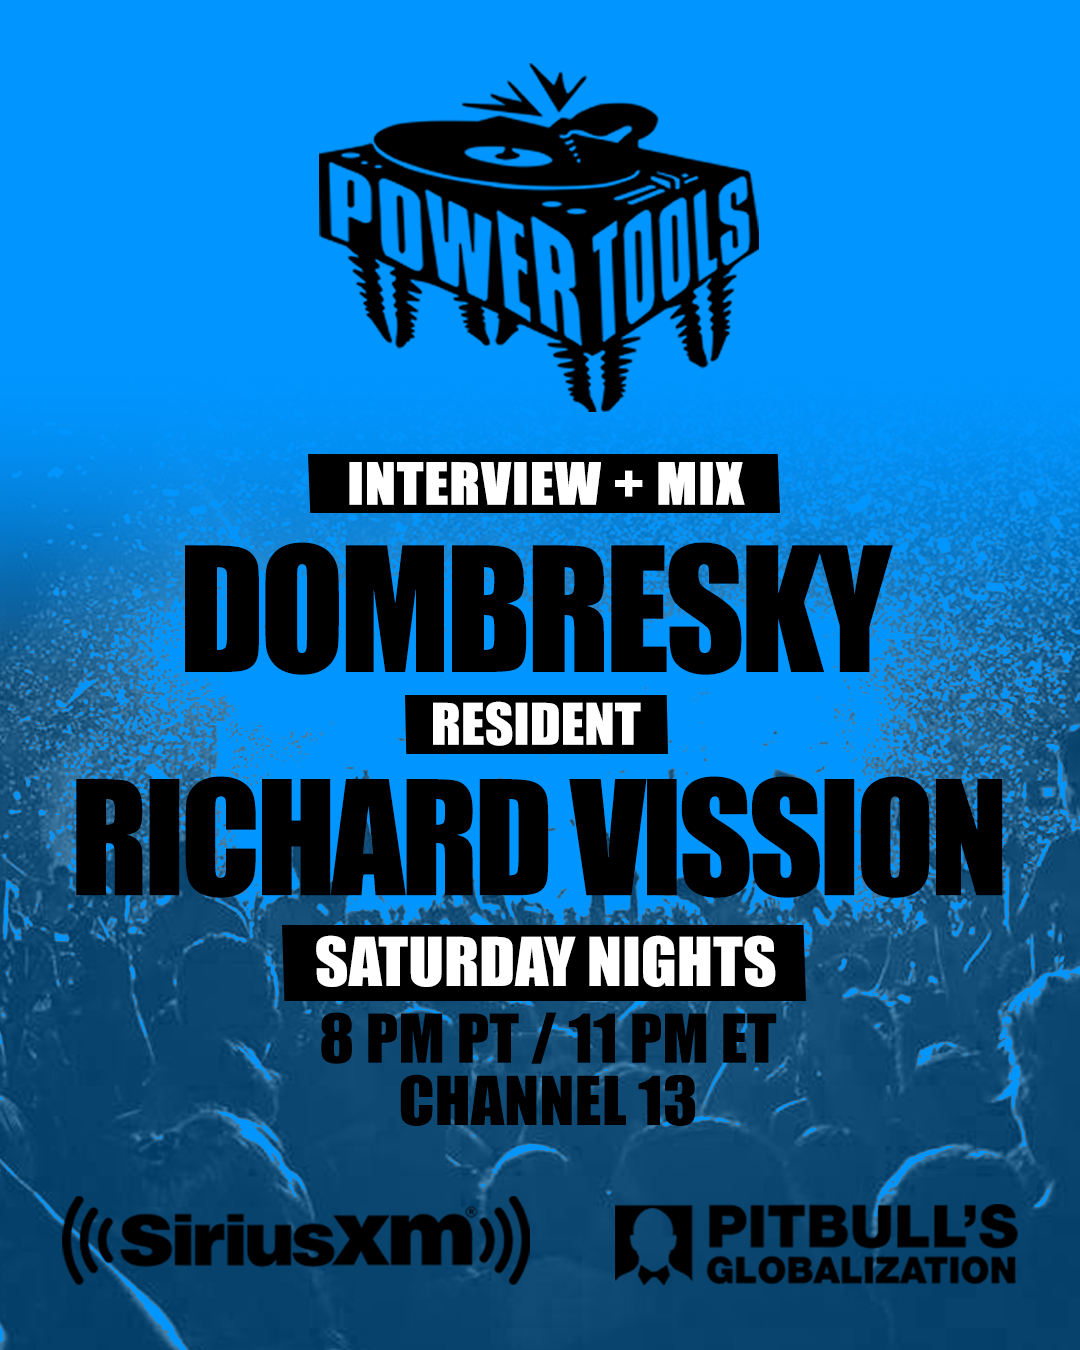 Episode 69: Powertools ft: Dombresky and Richard Vission